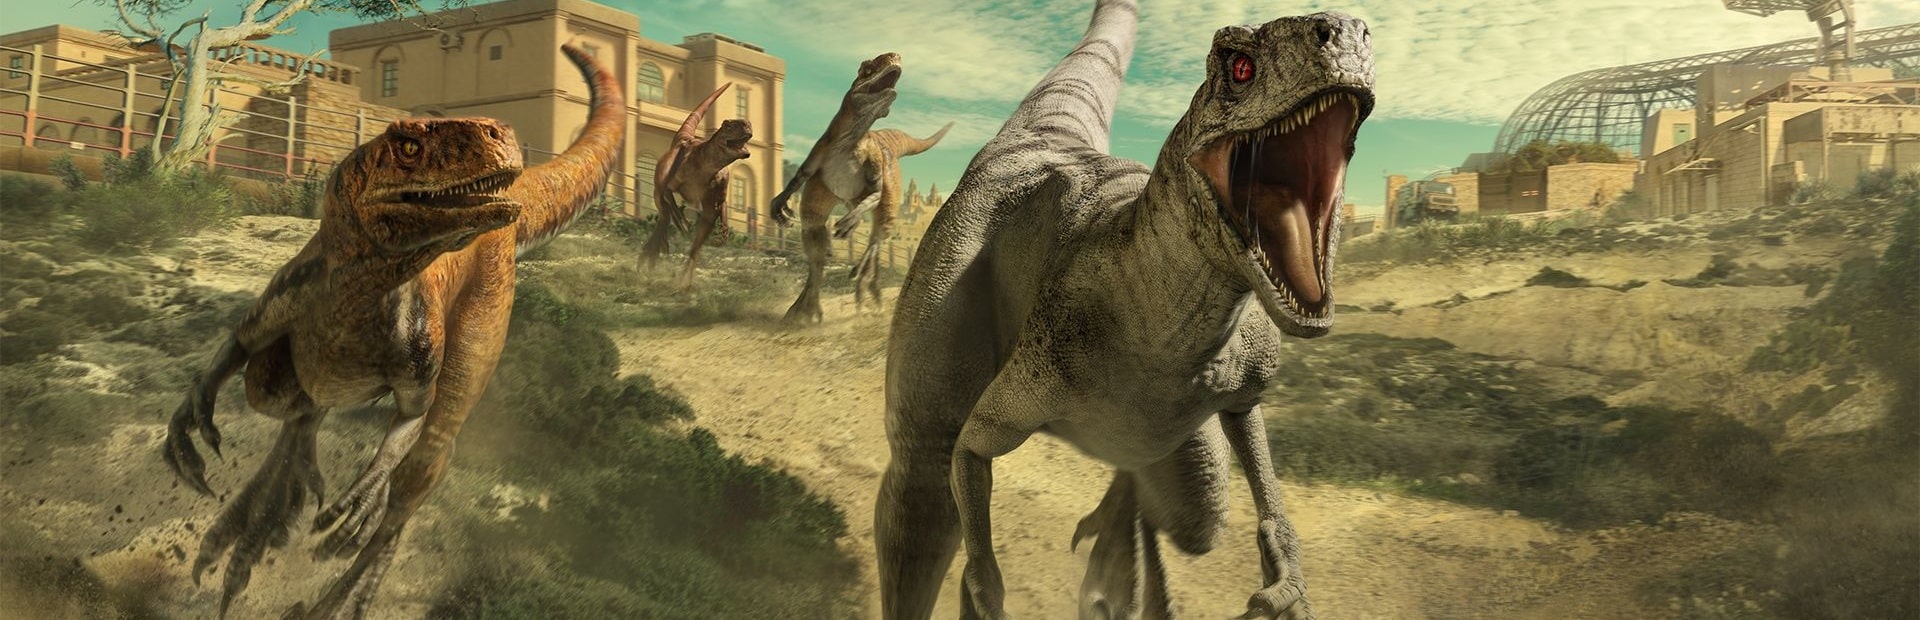 Jurassic World Evolution 2 | PC | Steam Digital Download | Wallpaper